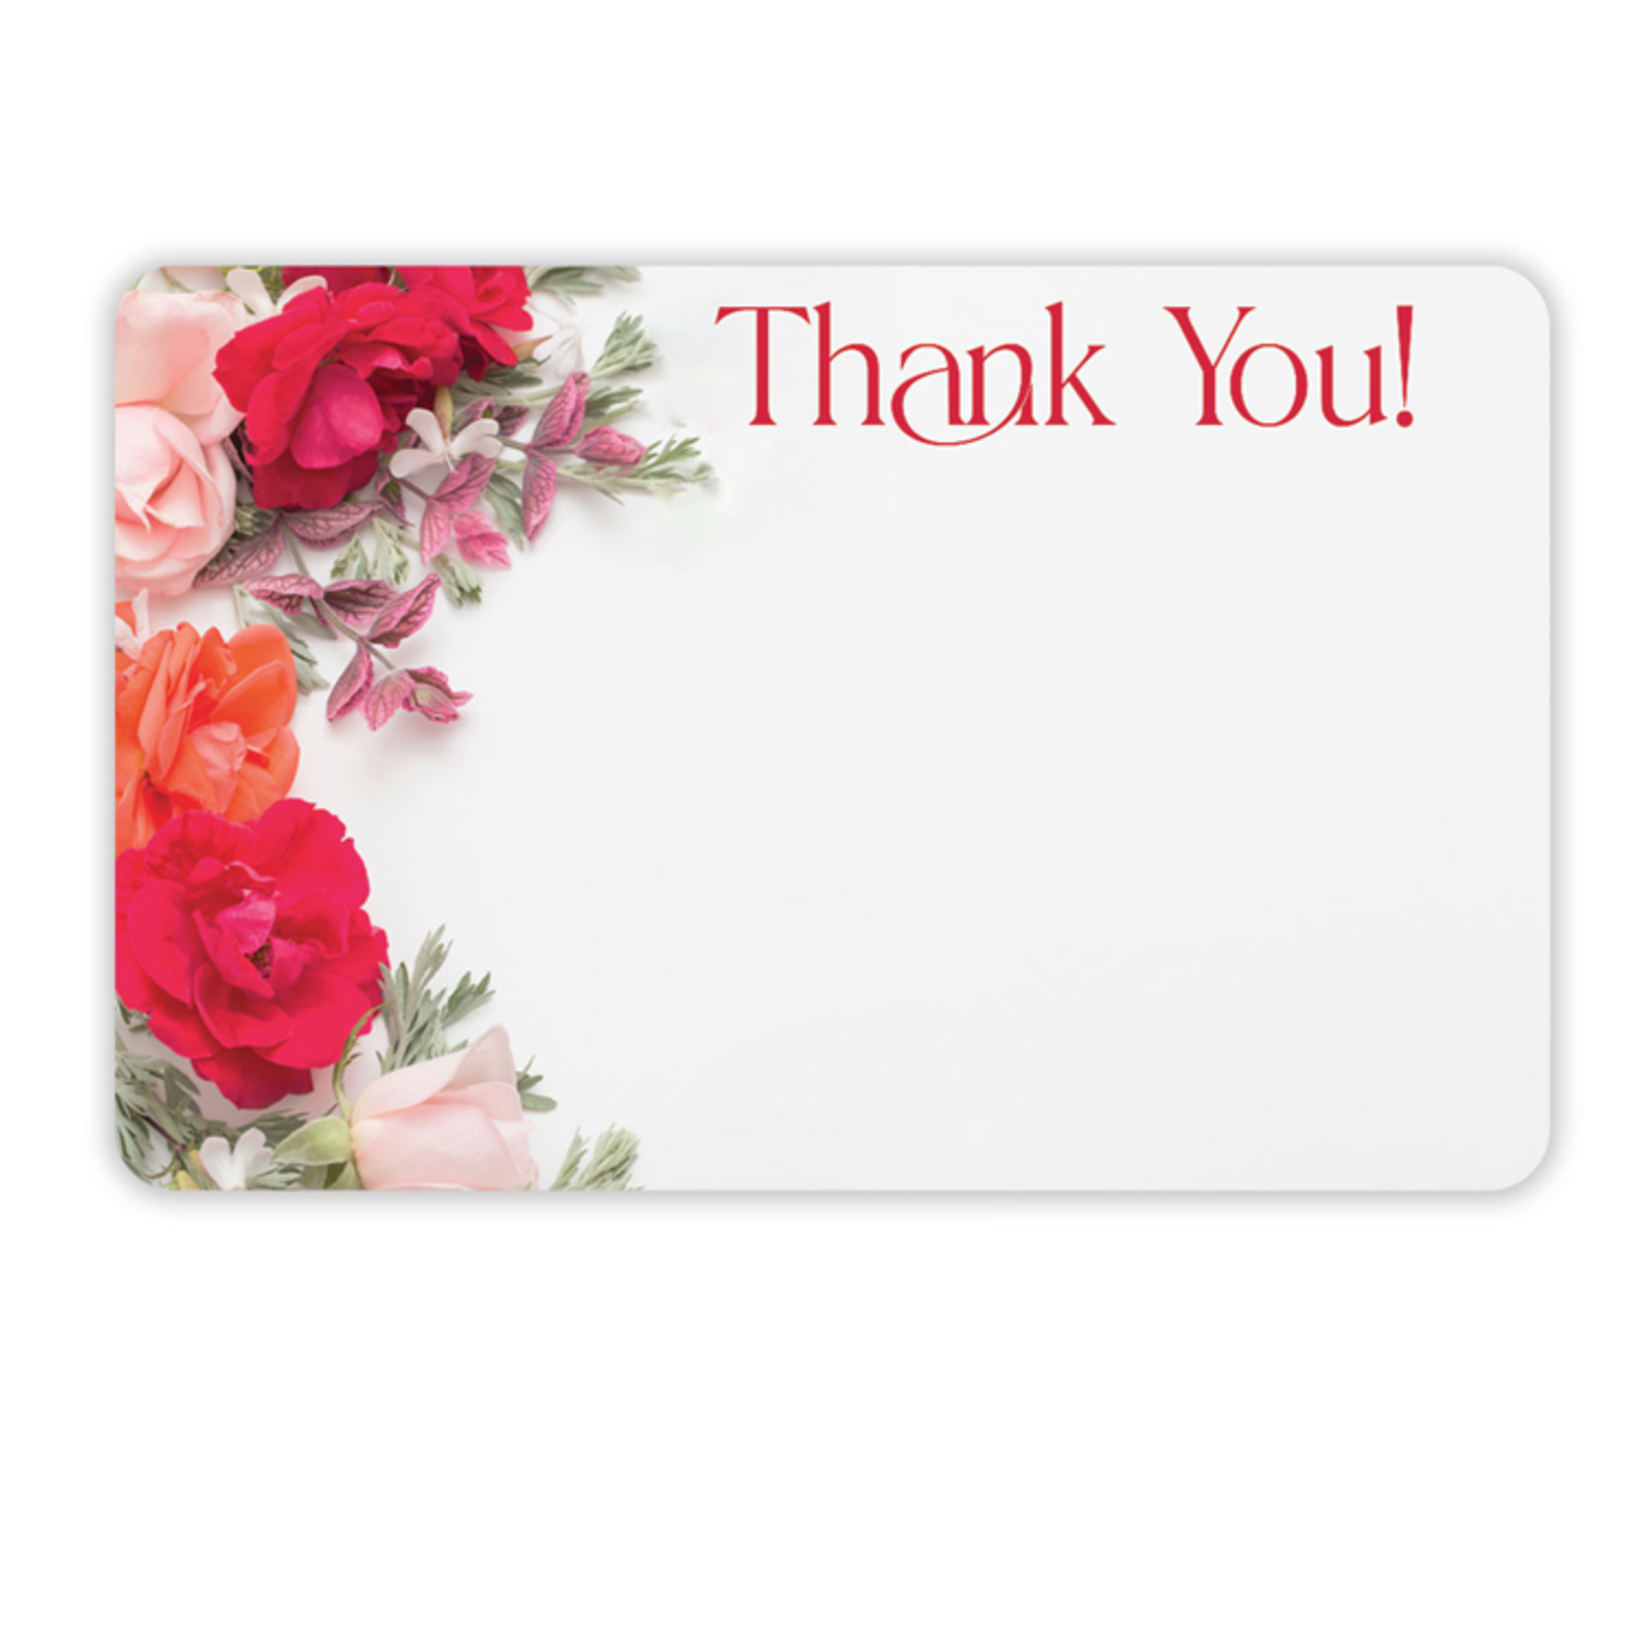 "THANK YOU" CAPRI CARD